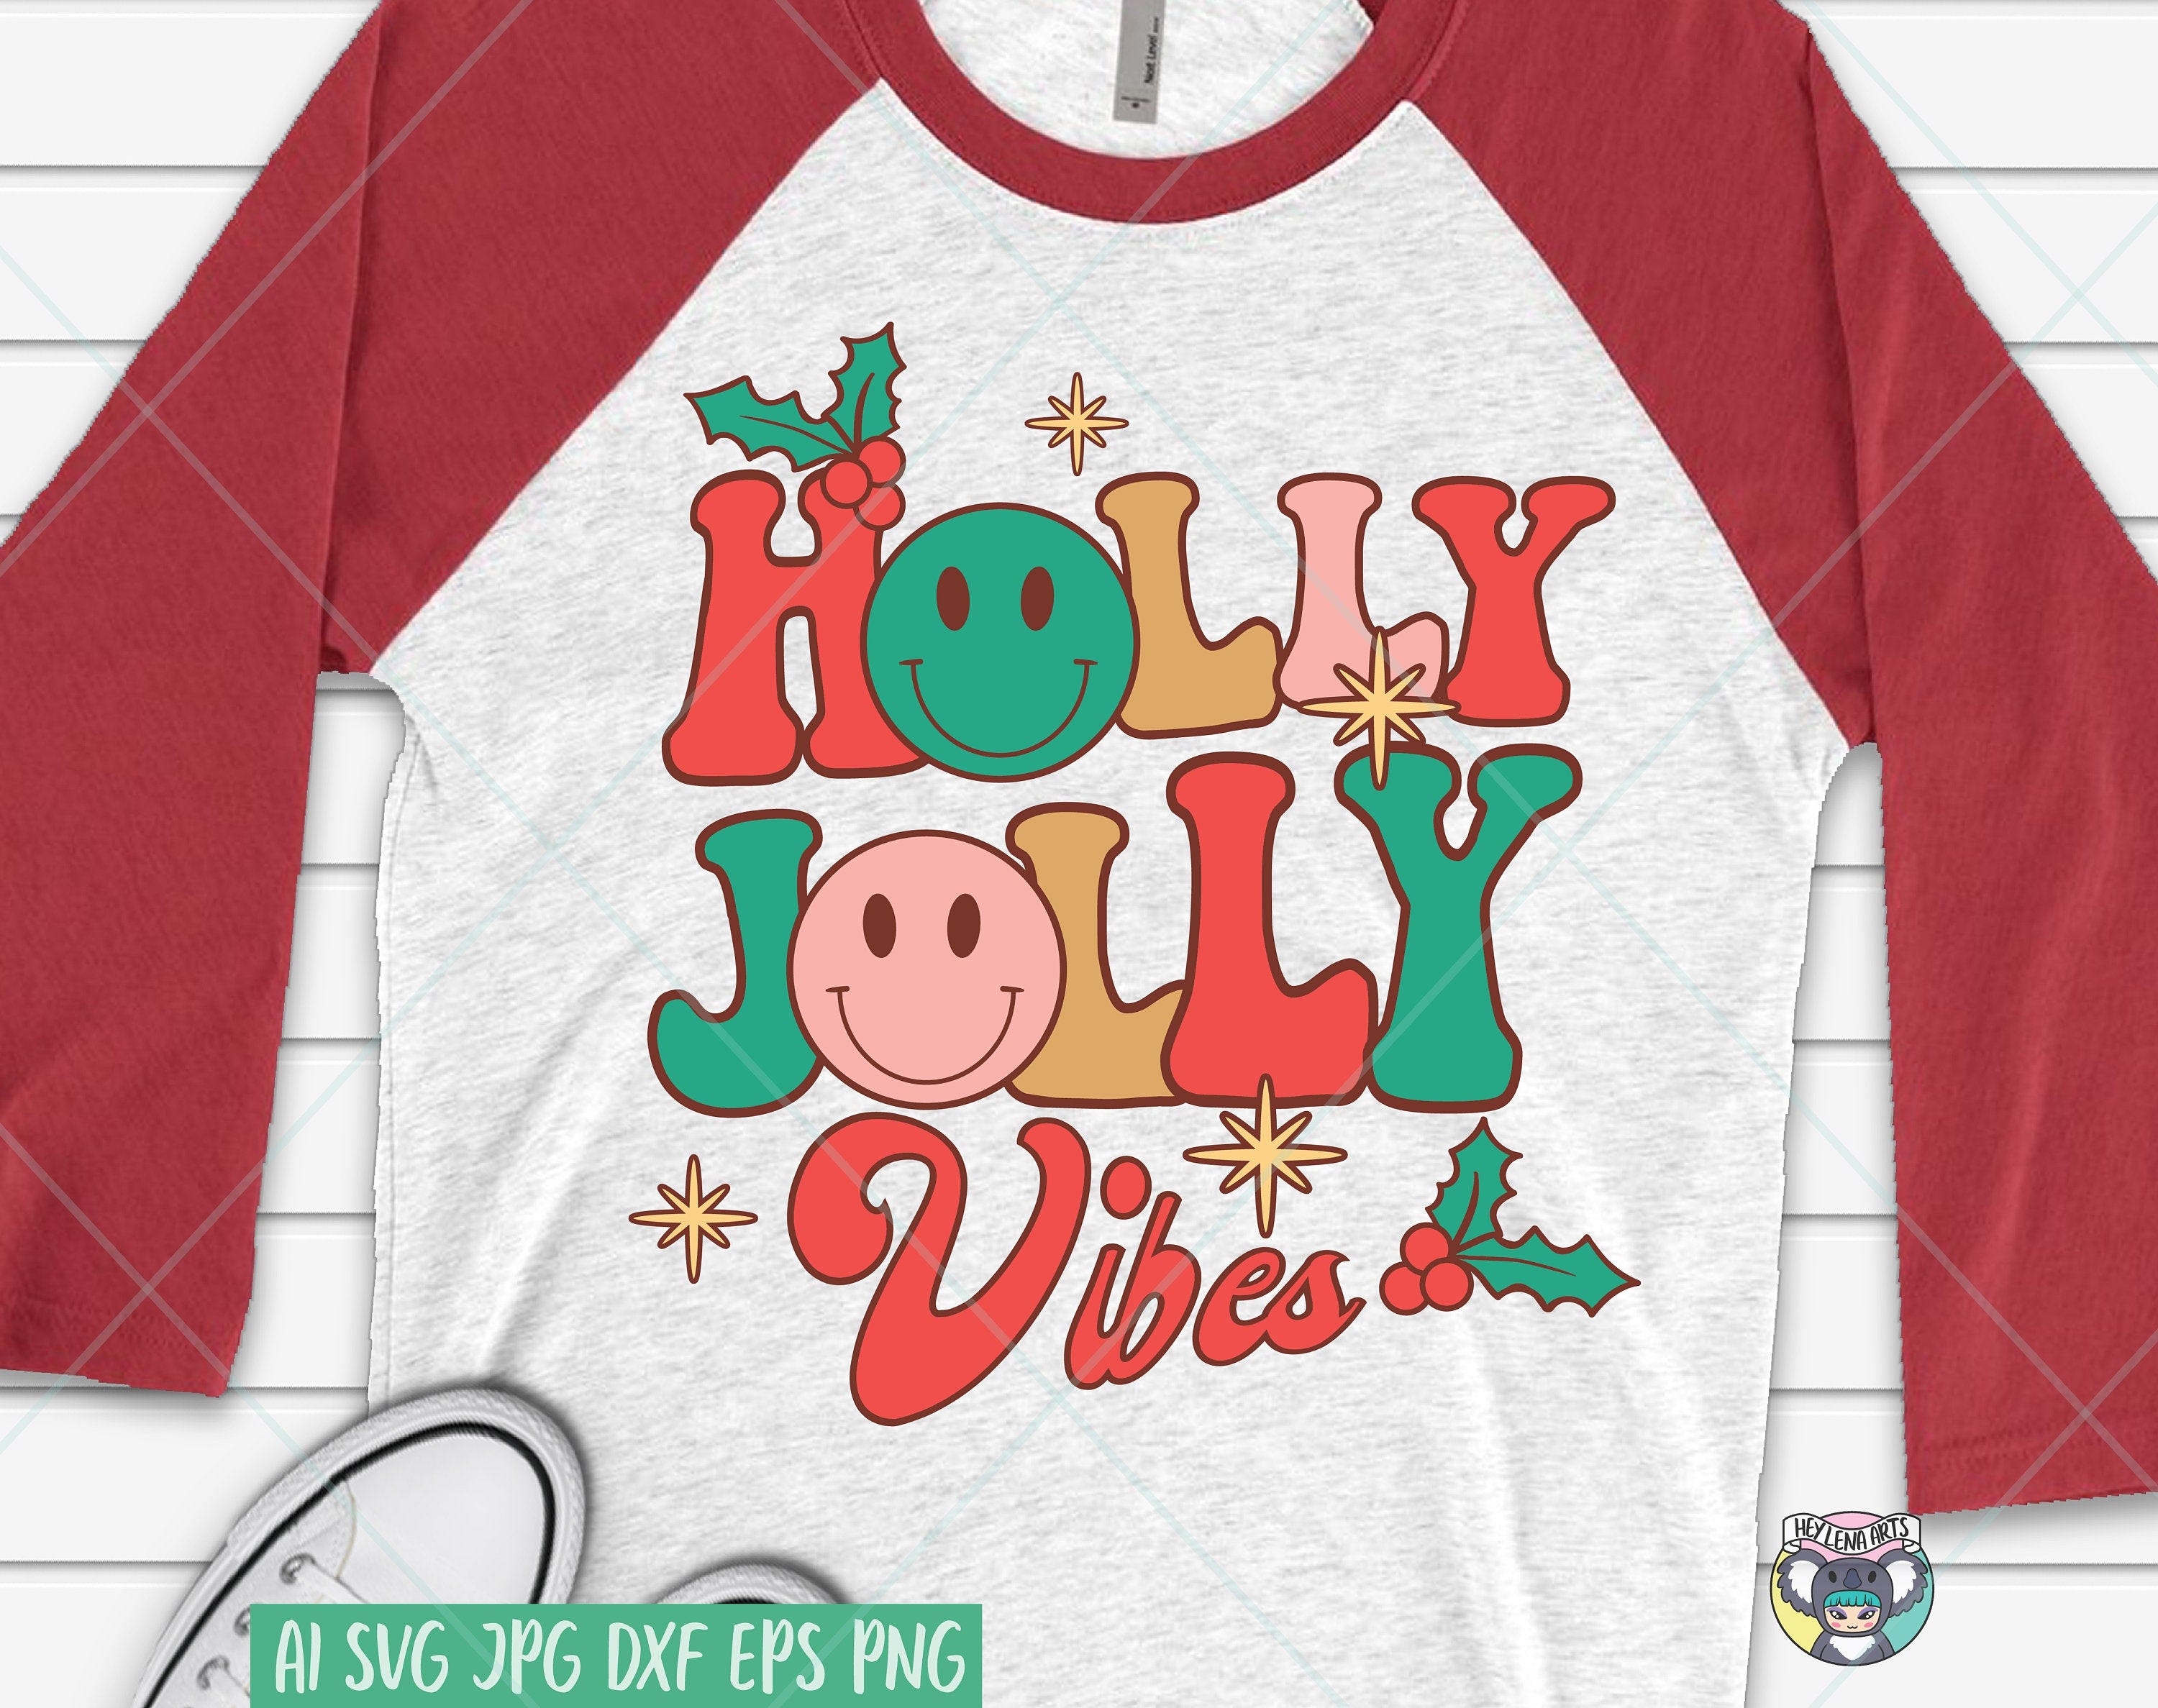 Holly Jolly Vibes svg, Retro Christmas svg, Christmas svg, Retro Christmas Shirt Svg, Groovy Christmas svg, Svg Files for Cricut